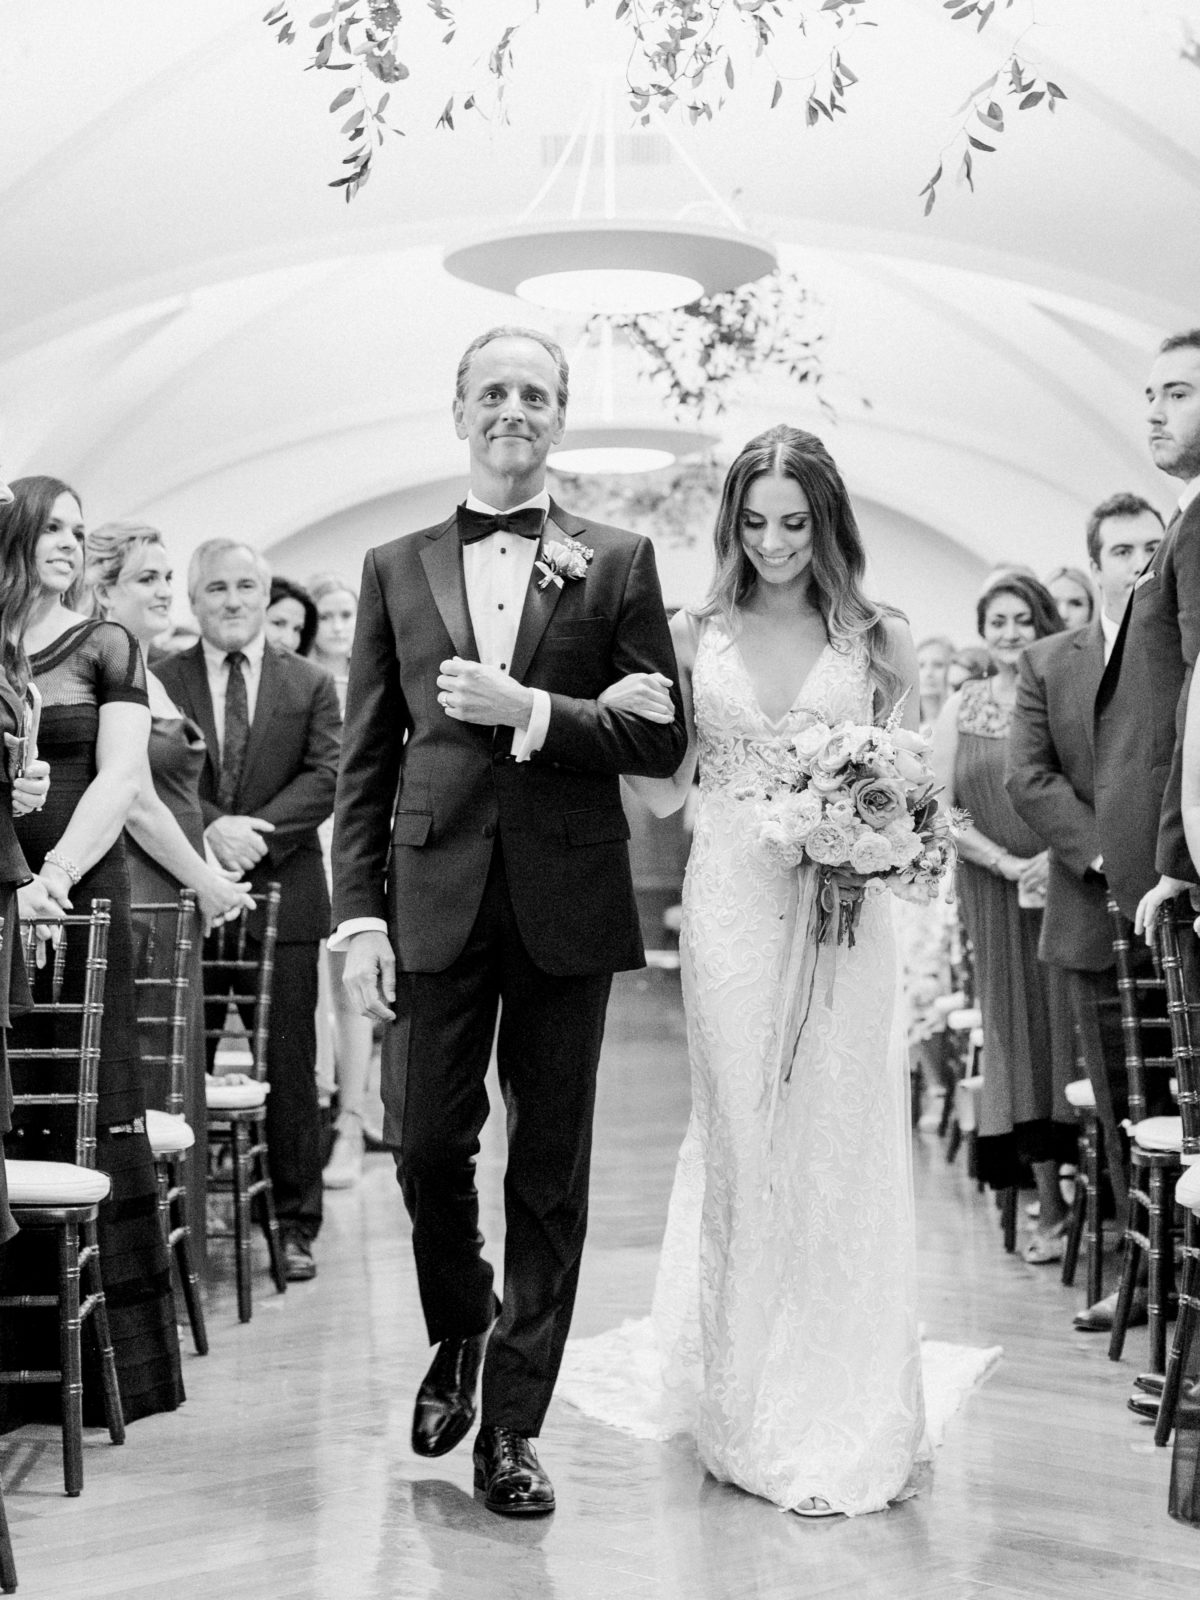 Laurel Hall Wedding Photos | Molly Carr Photography | Fine Art Film Photographer | Chicago Wedding | Summer Garden Party Wedding | European Wedding Inspiration | Floral Filled Ceremony